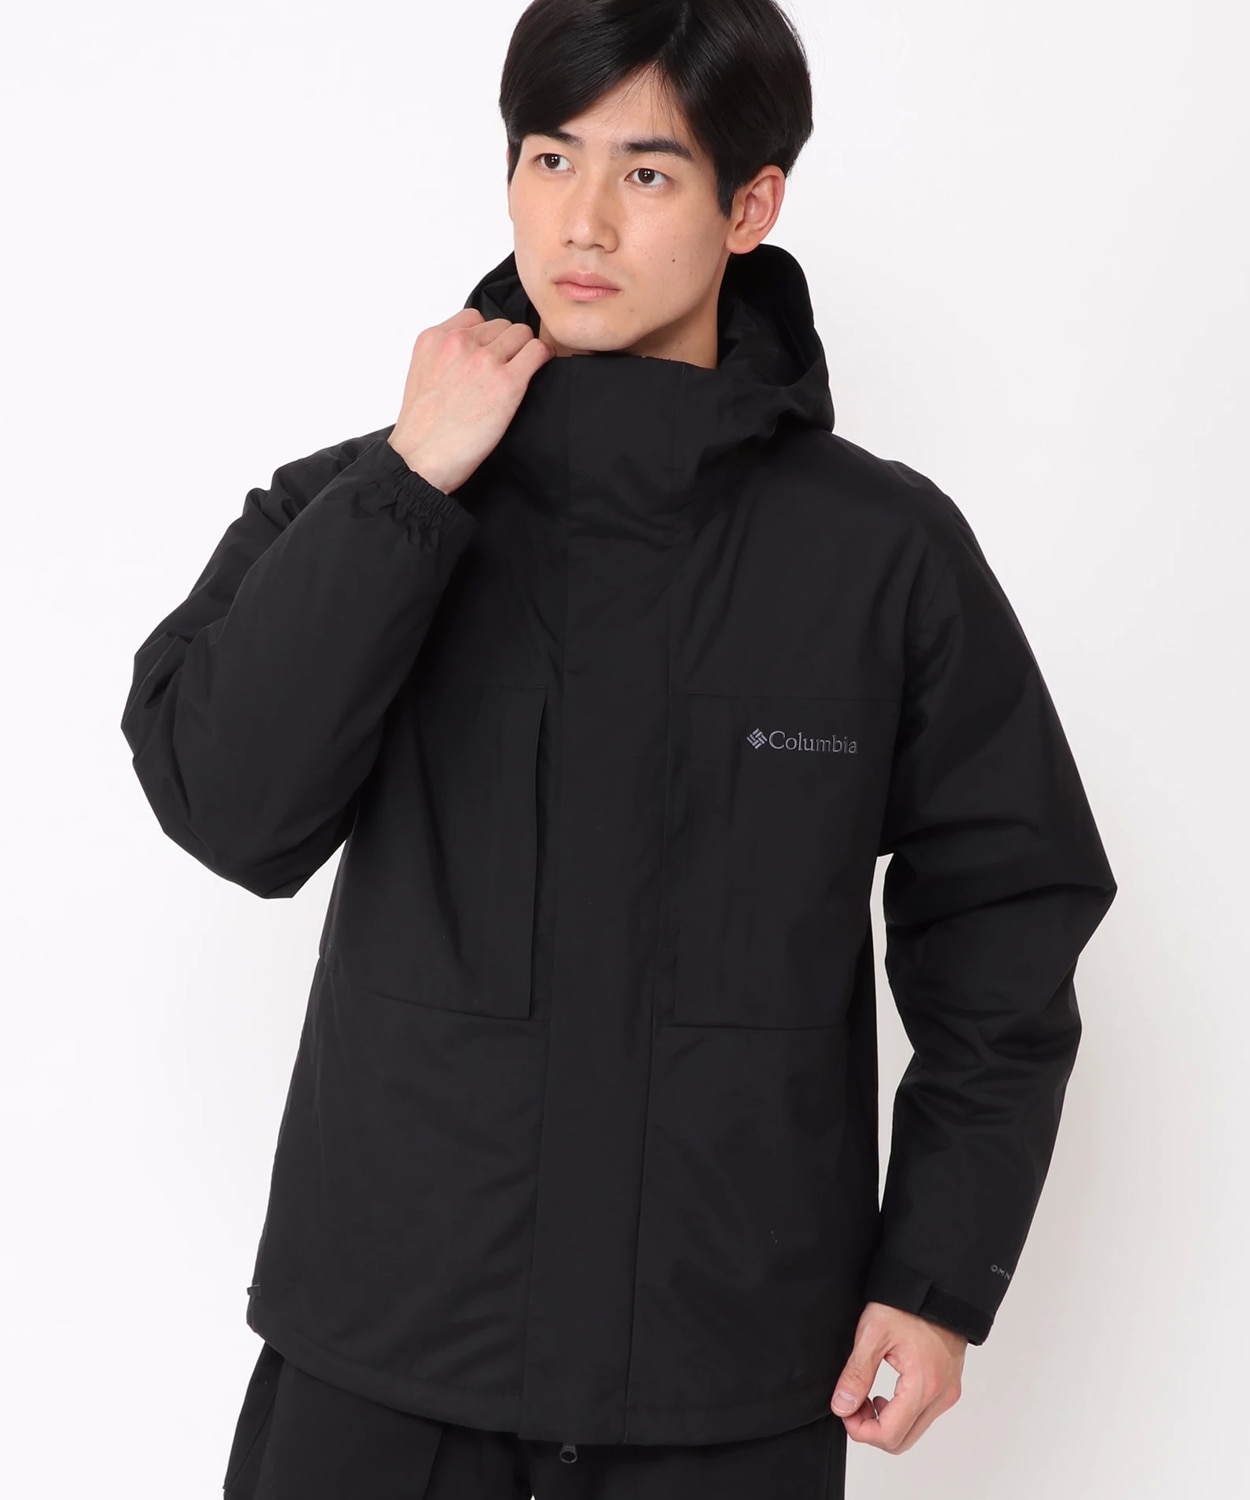 discount 70% MEN FASHION Jackets Print Black/White XL Inside jacket 